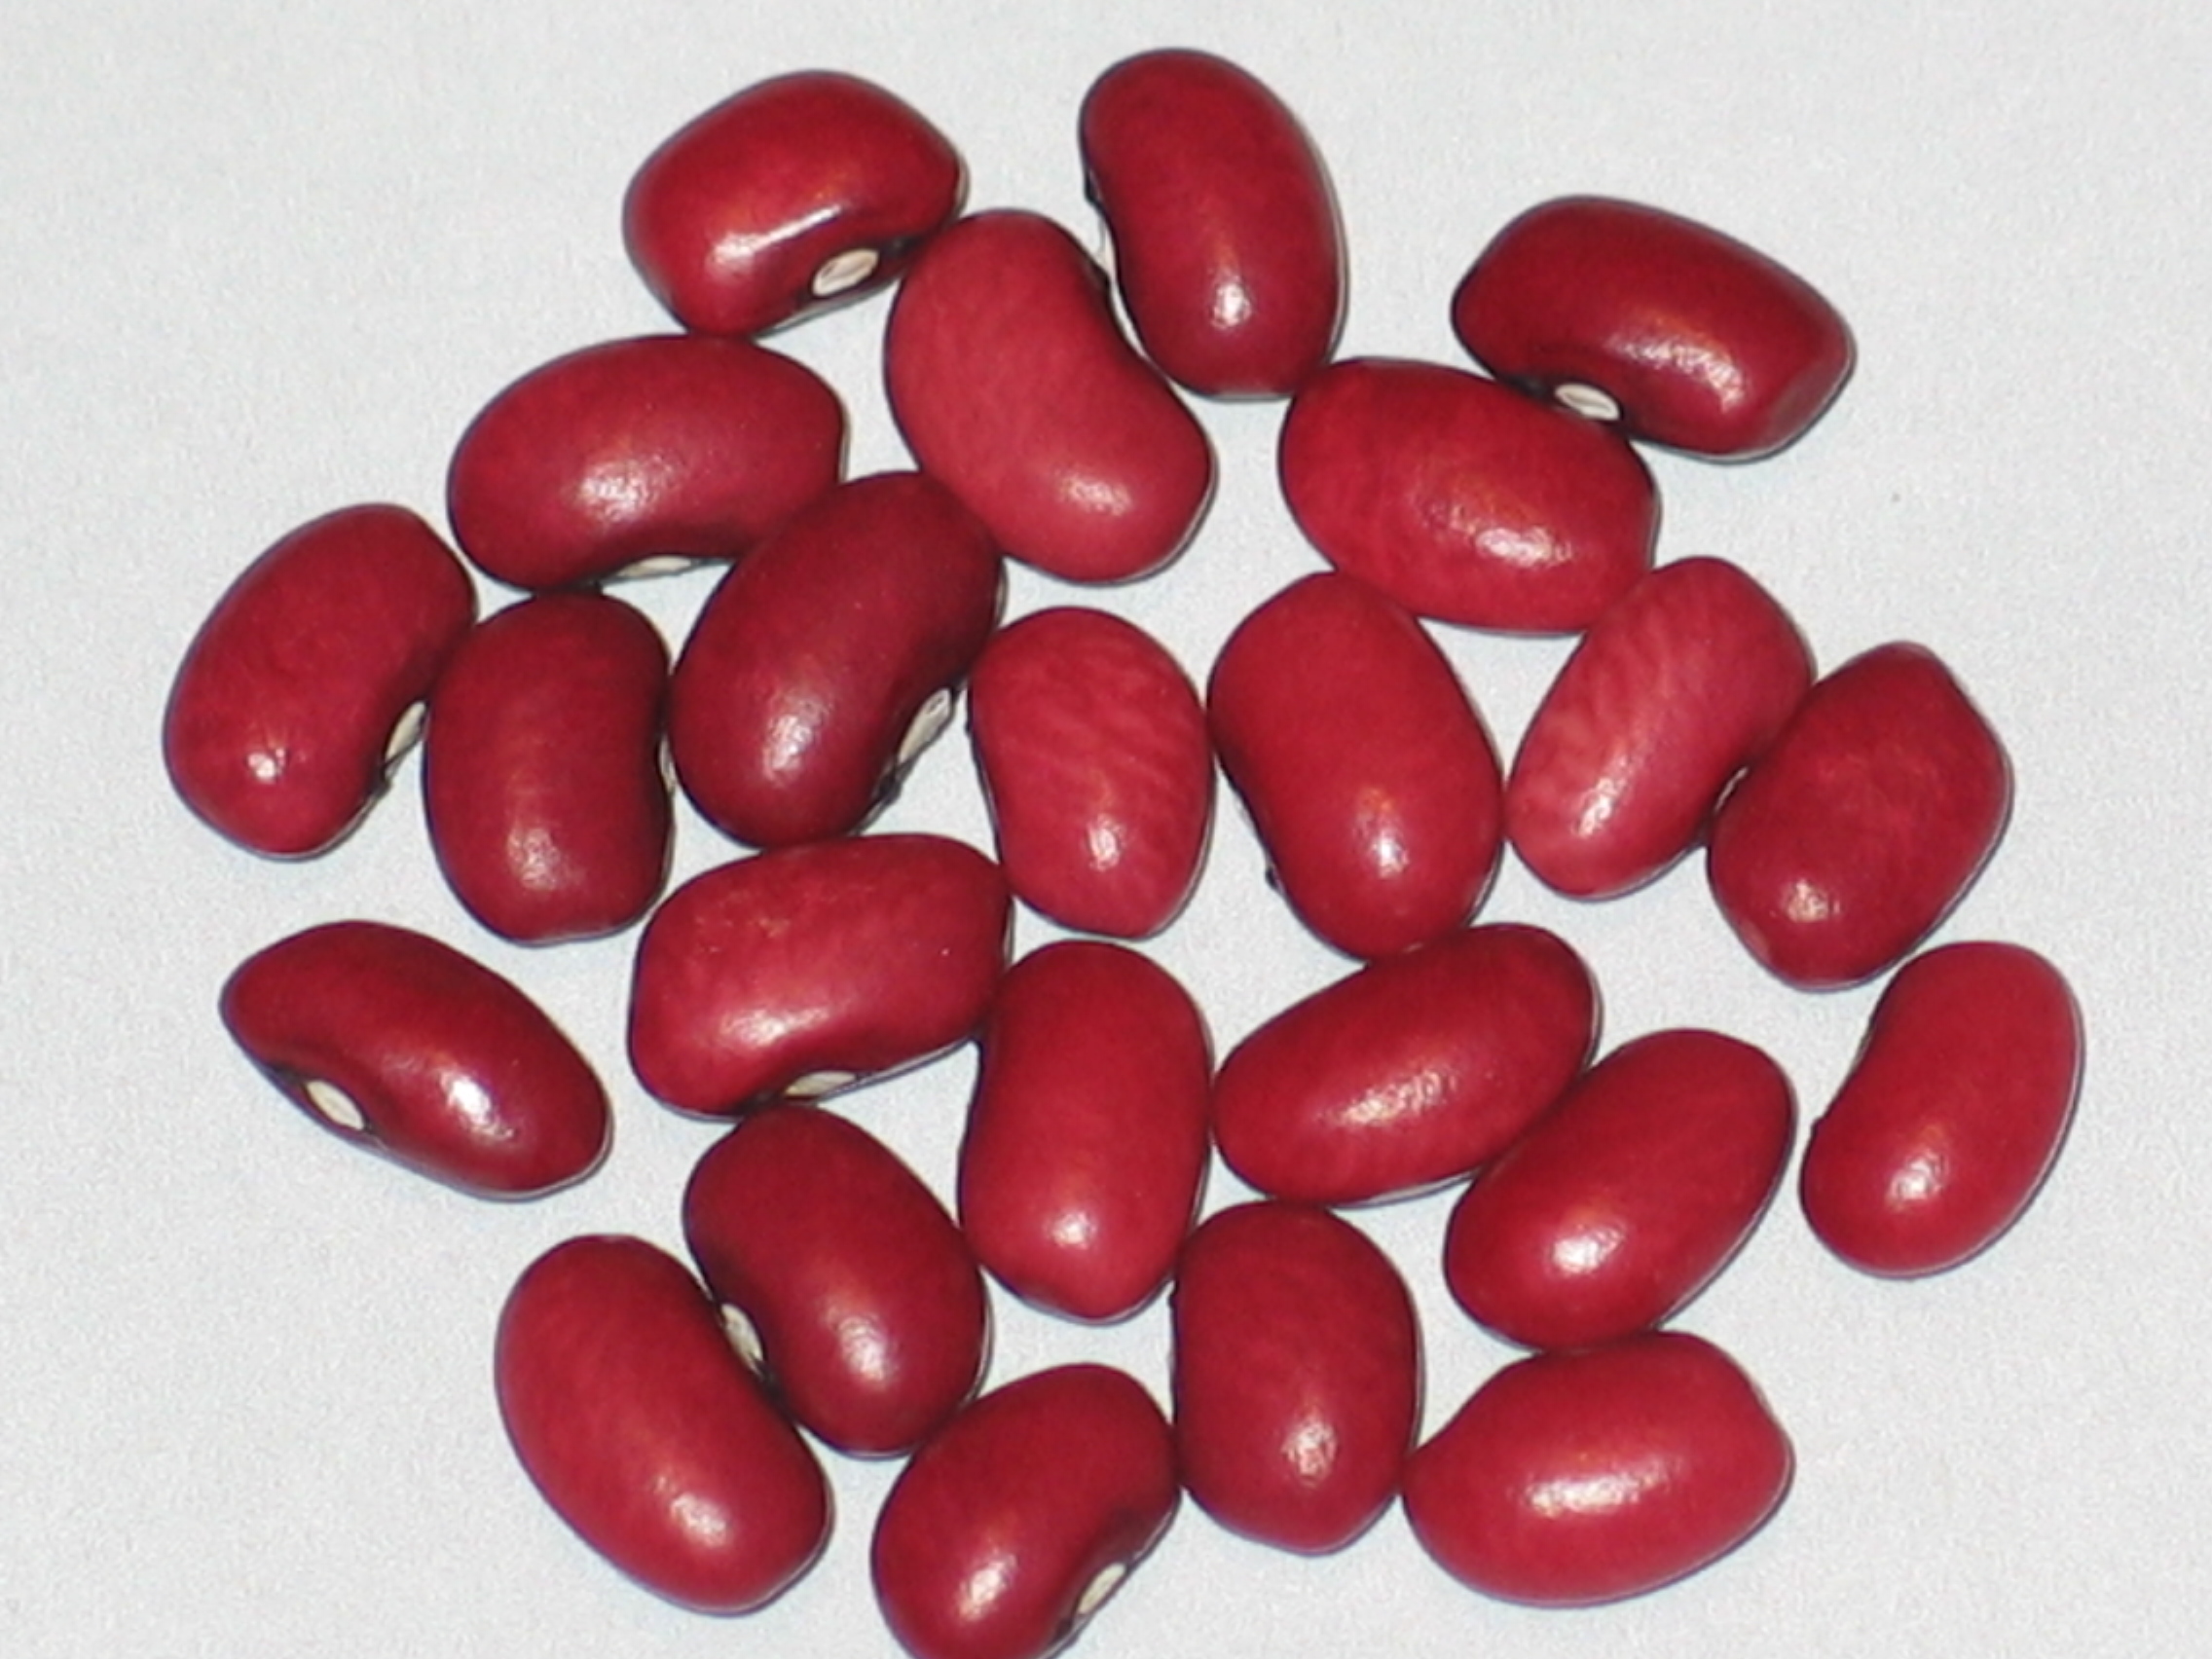 image of Mantecossa De Aragon beans